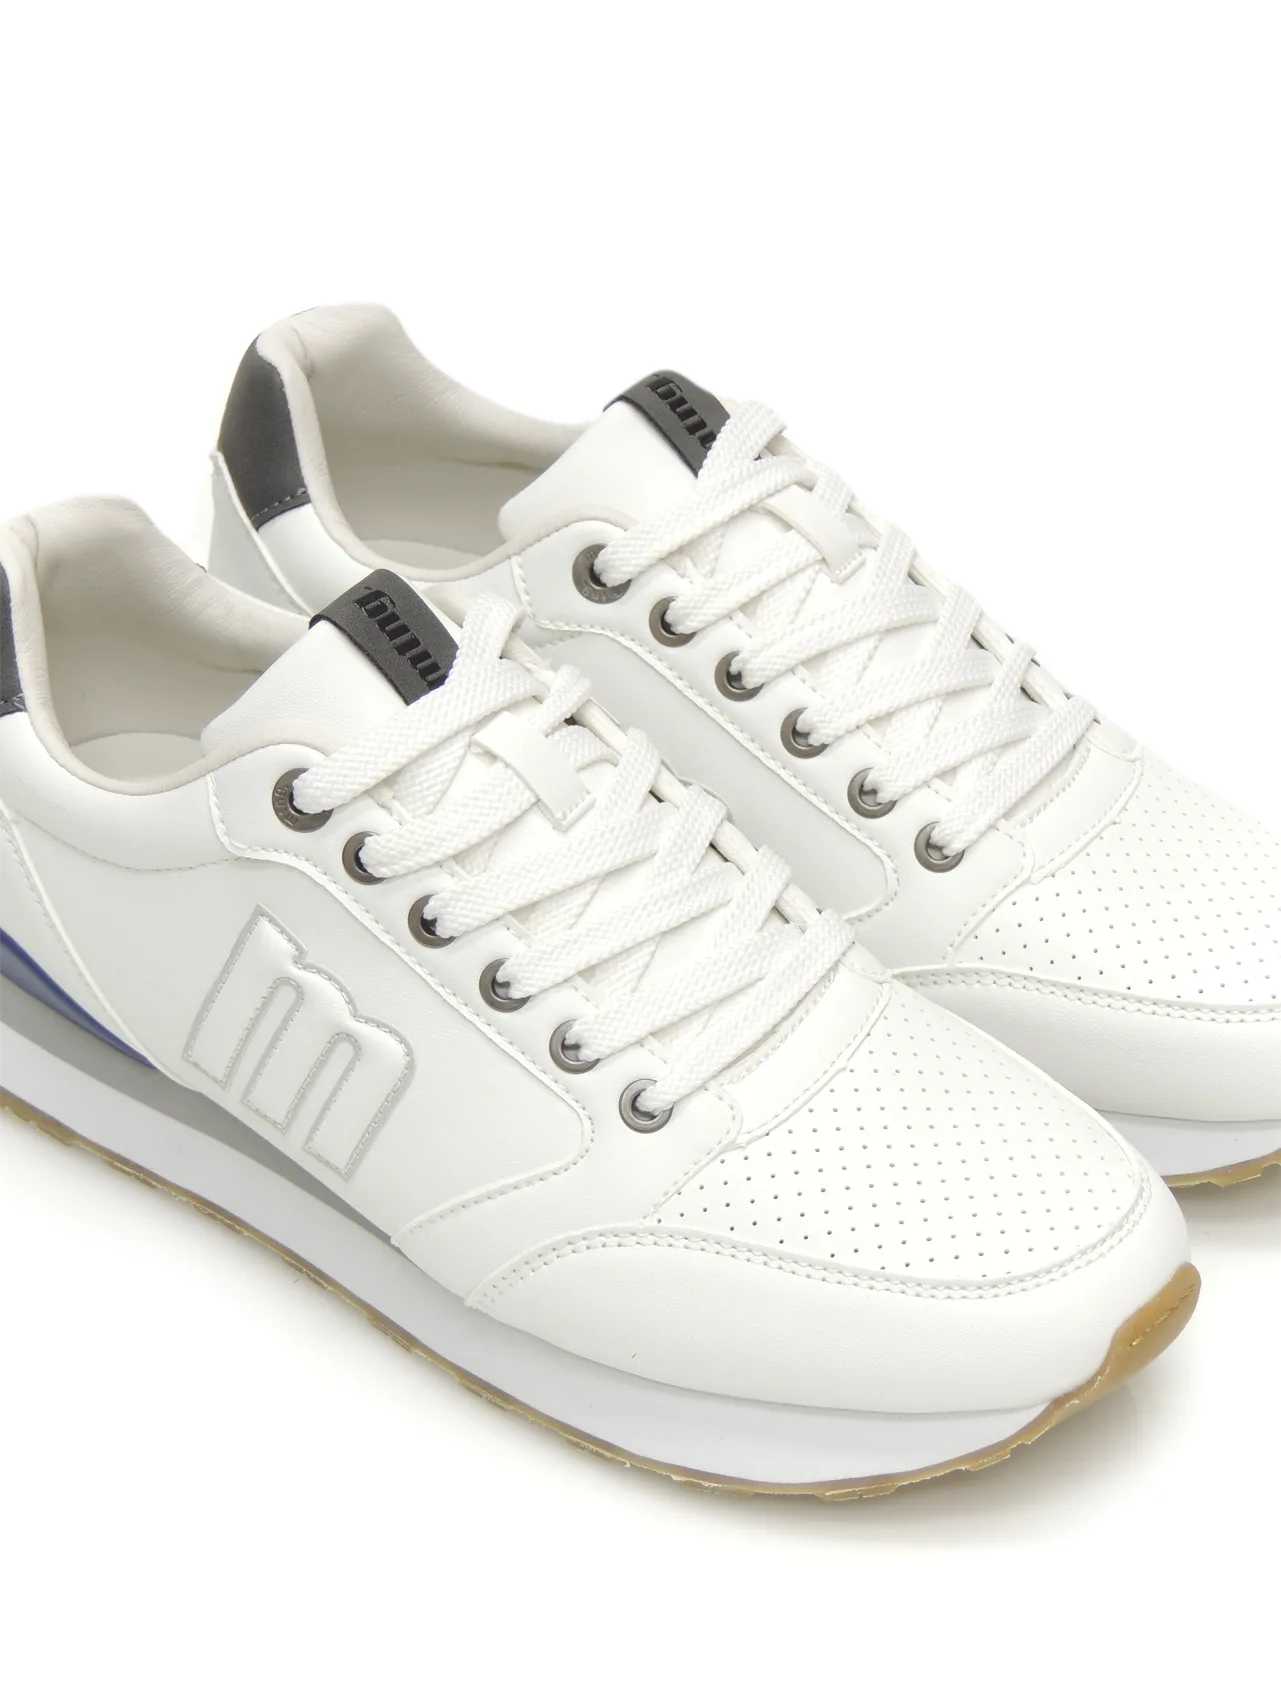 sneakers--mustang-84697-polipiel-blanco